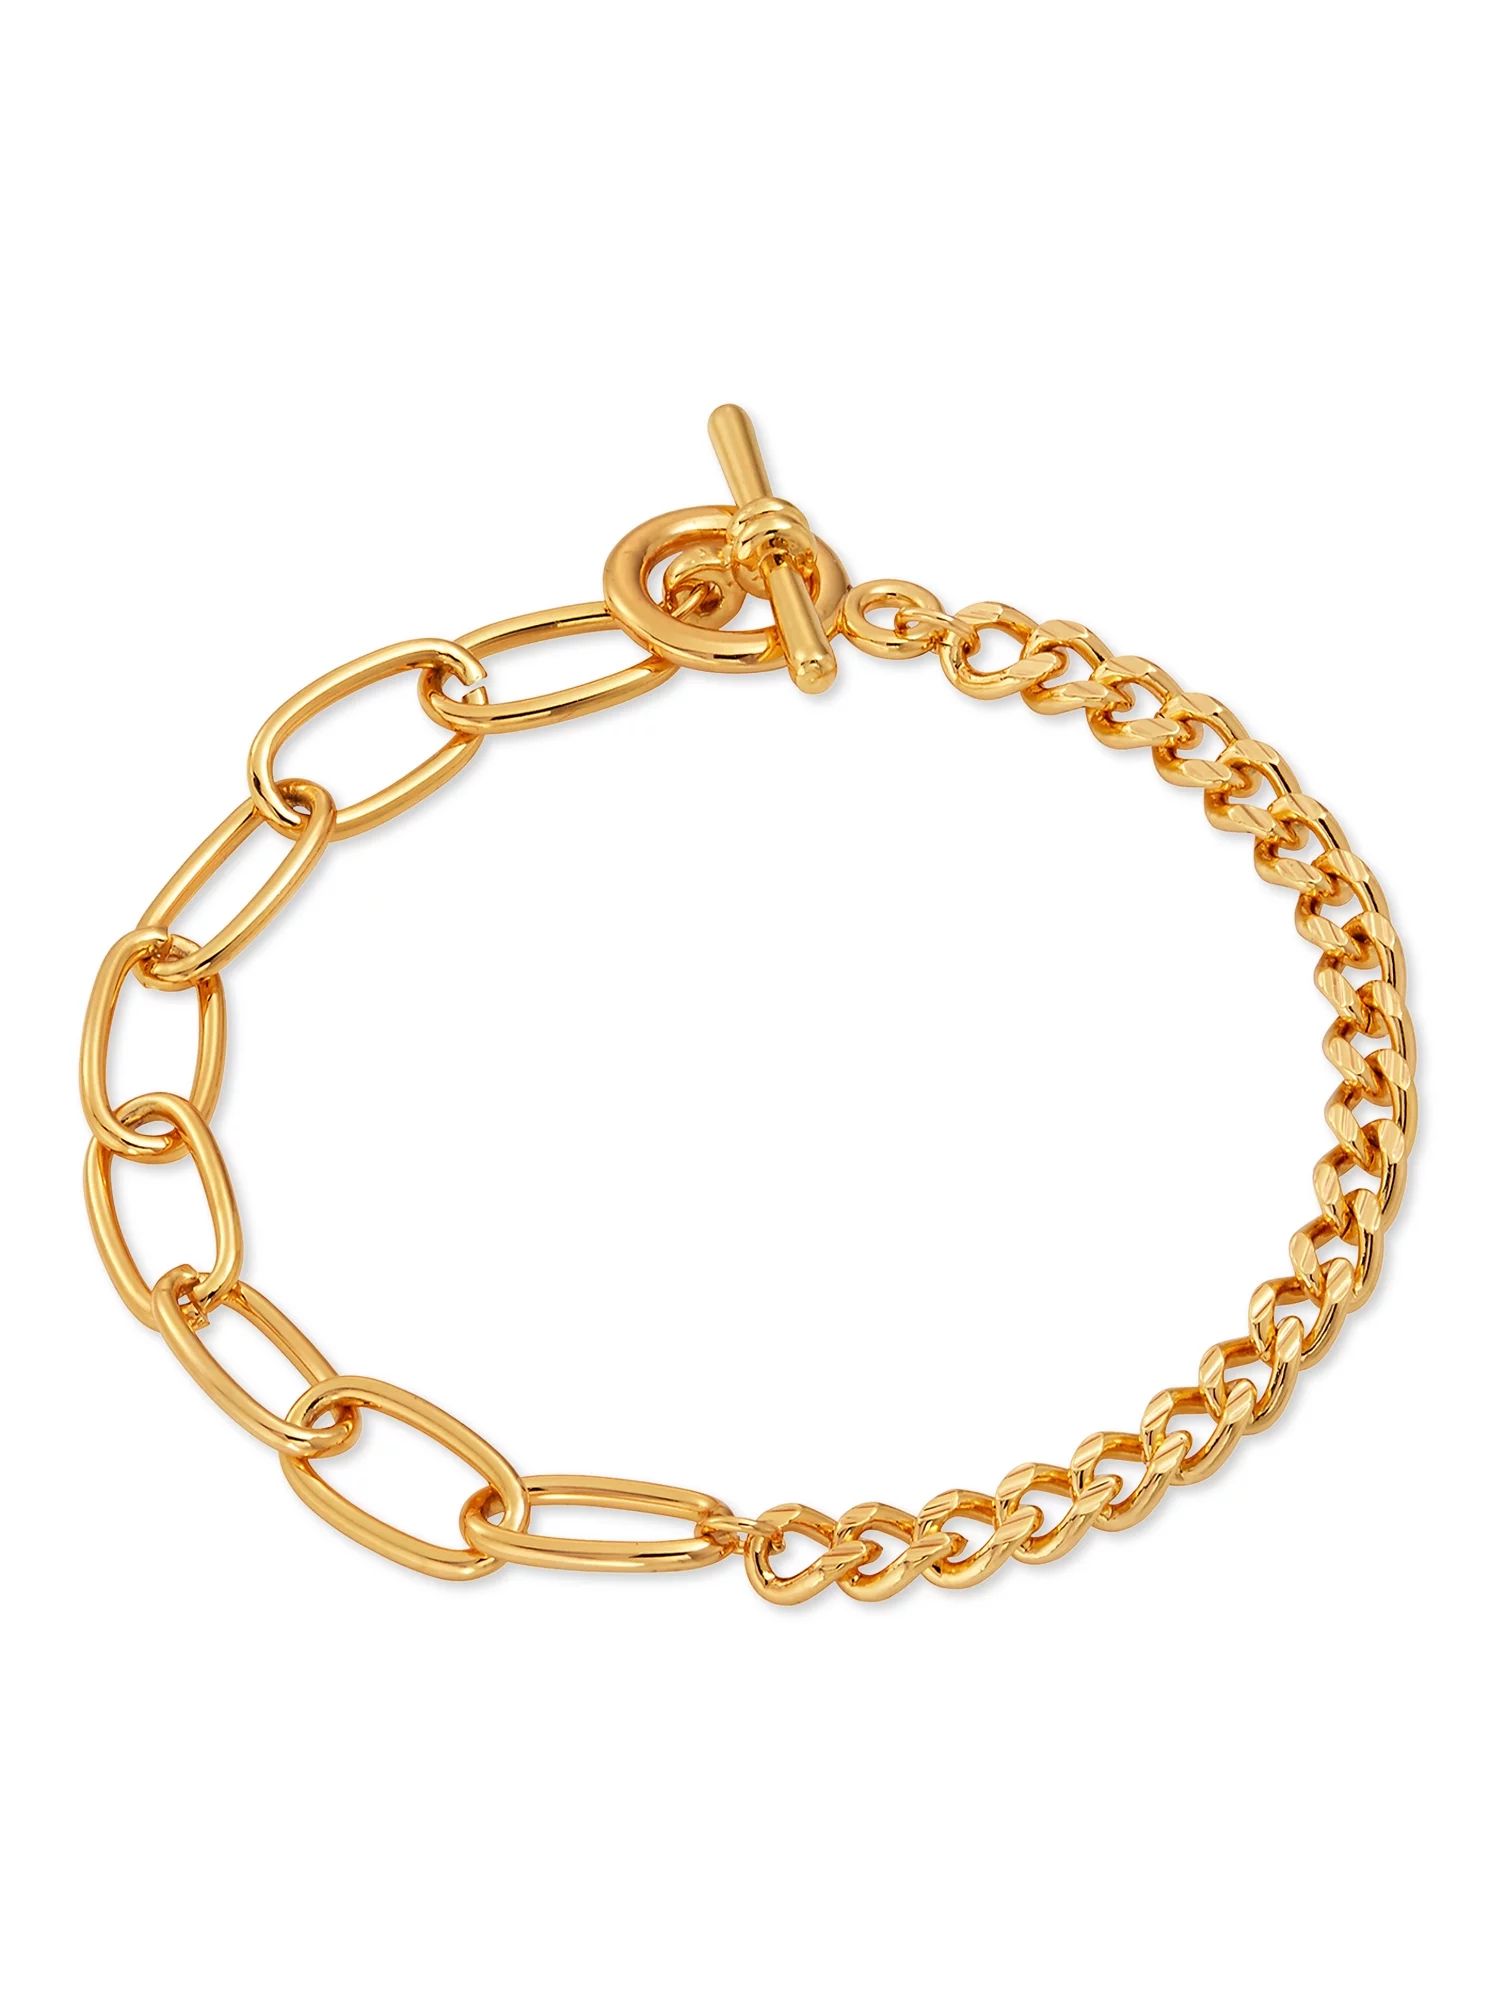 Scoop 14KT Gold Flash Plated Brass Curb Link Chain Bracelet, 8.5" | Walmart (US)